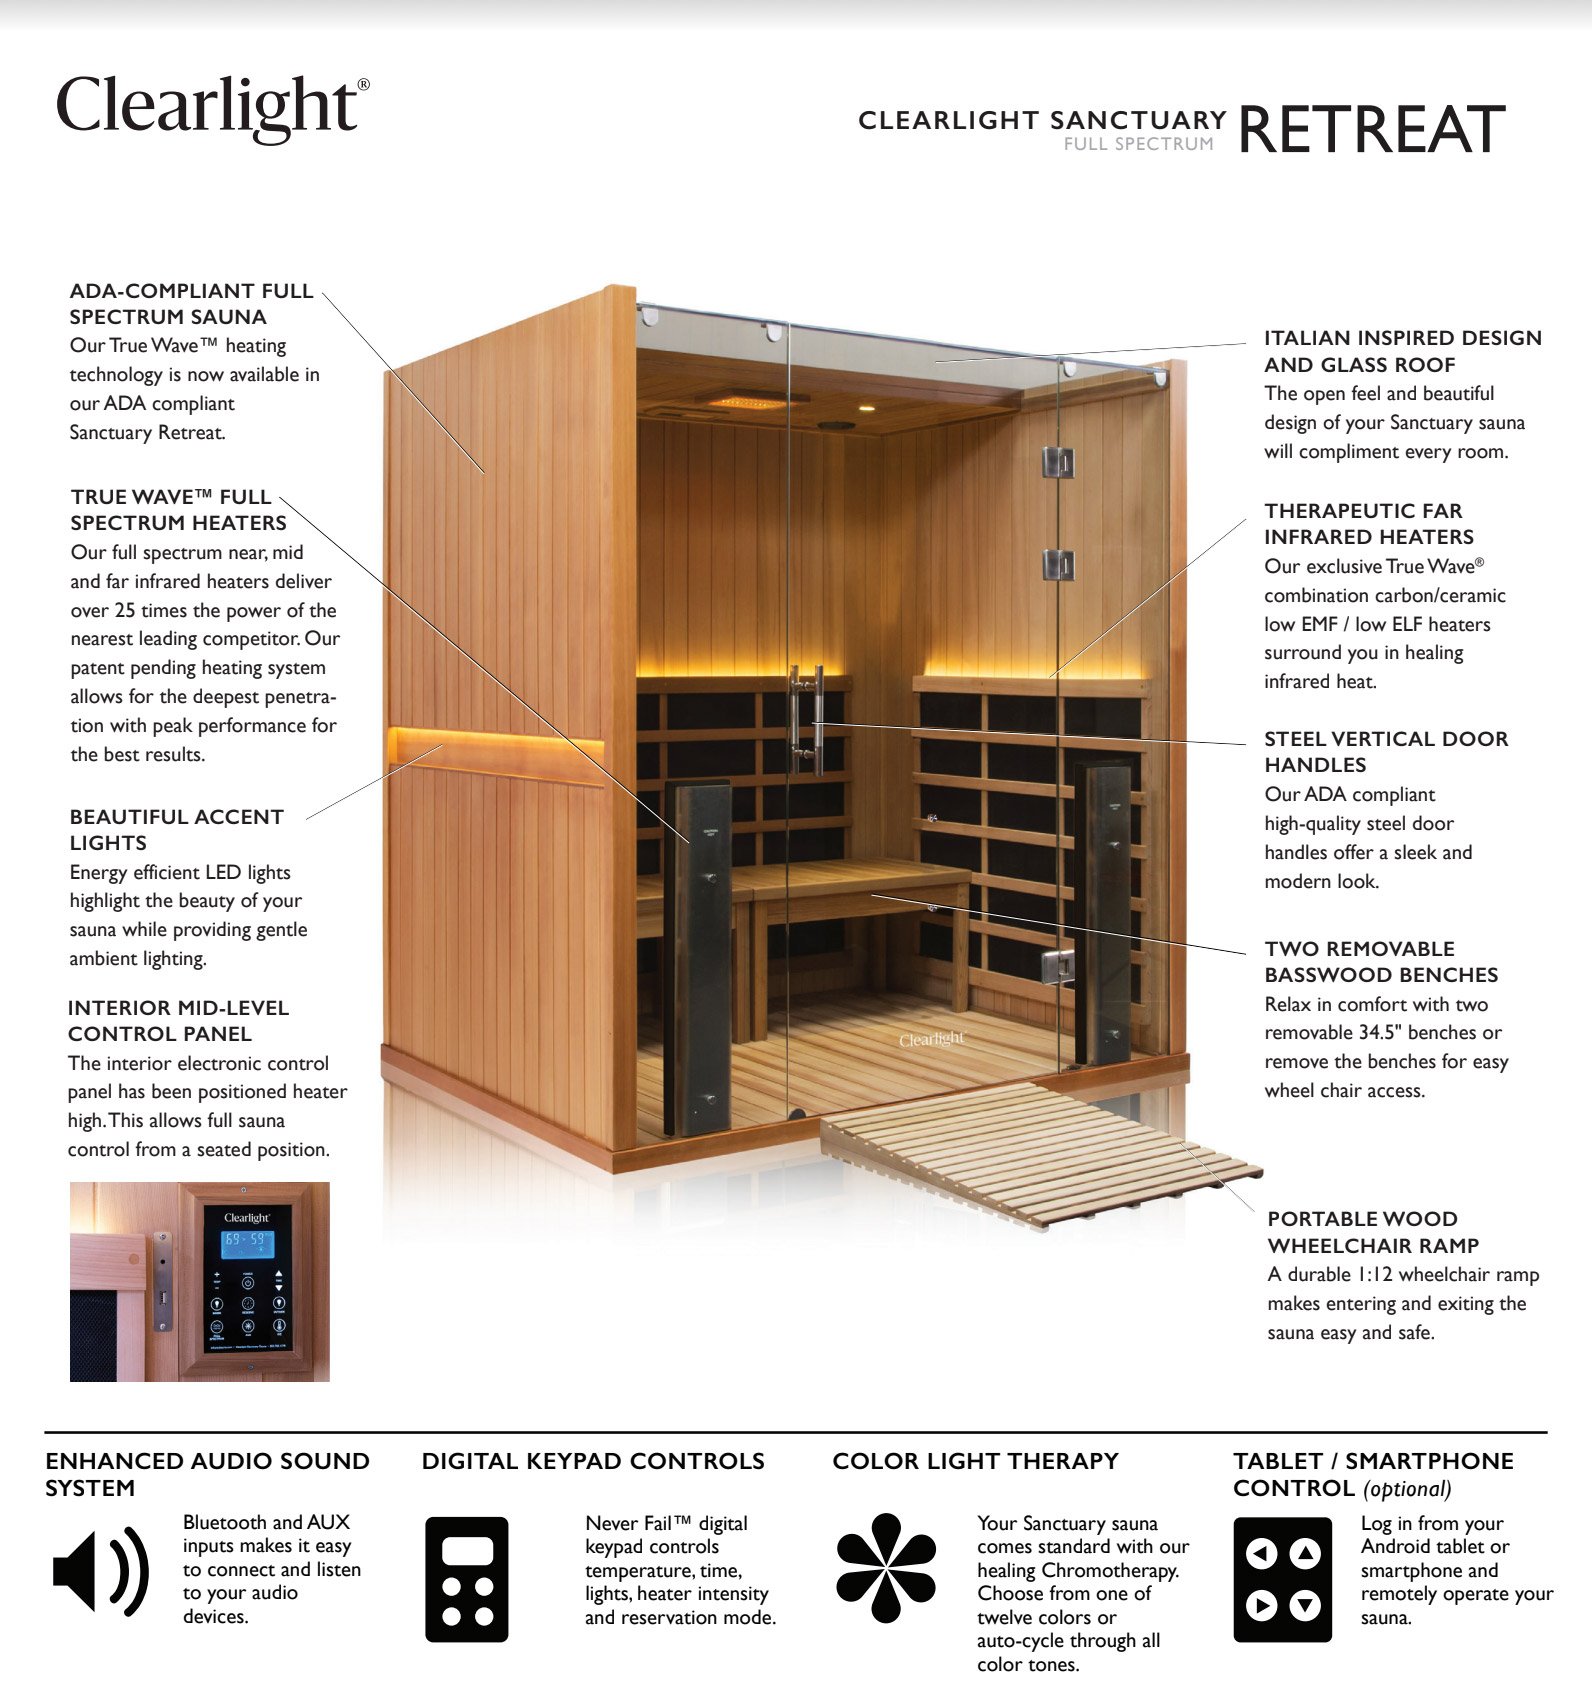 Clearlight-Sauna-Sanctuary-Retreat.jpg